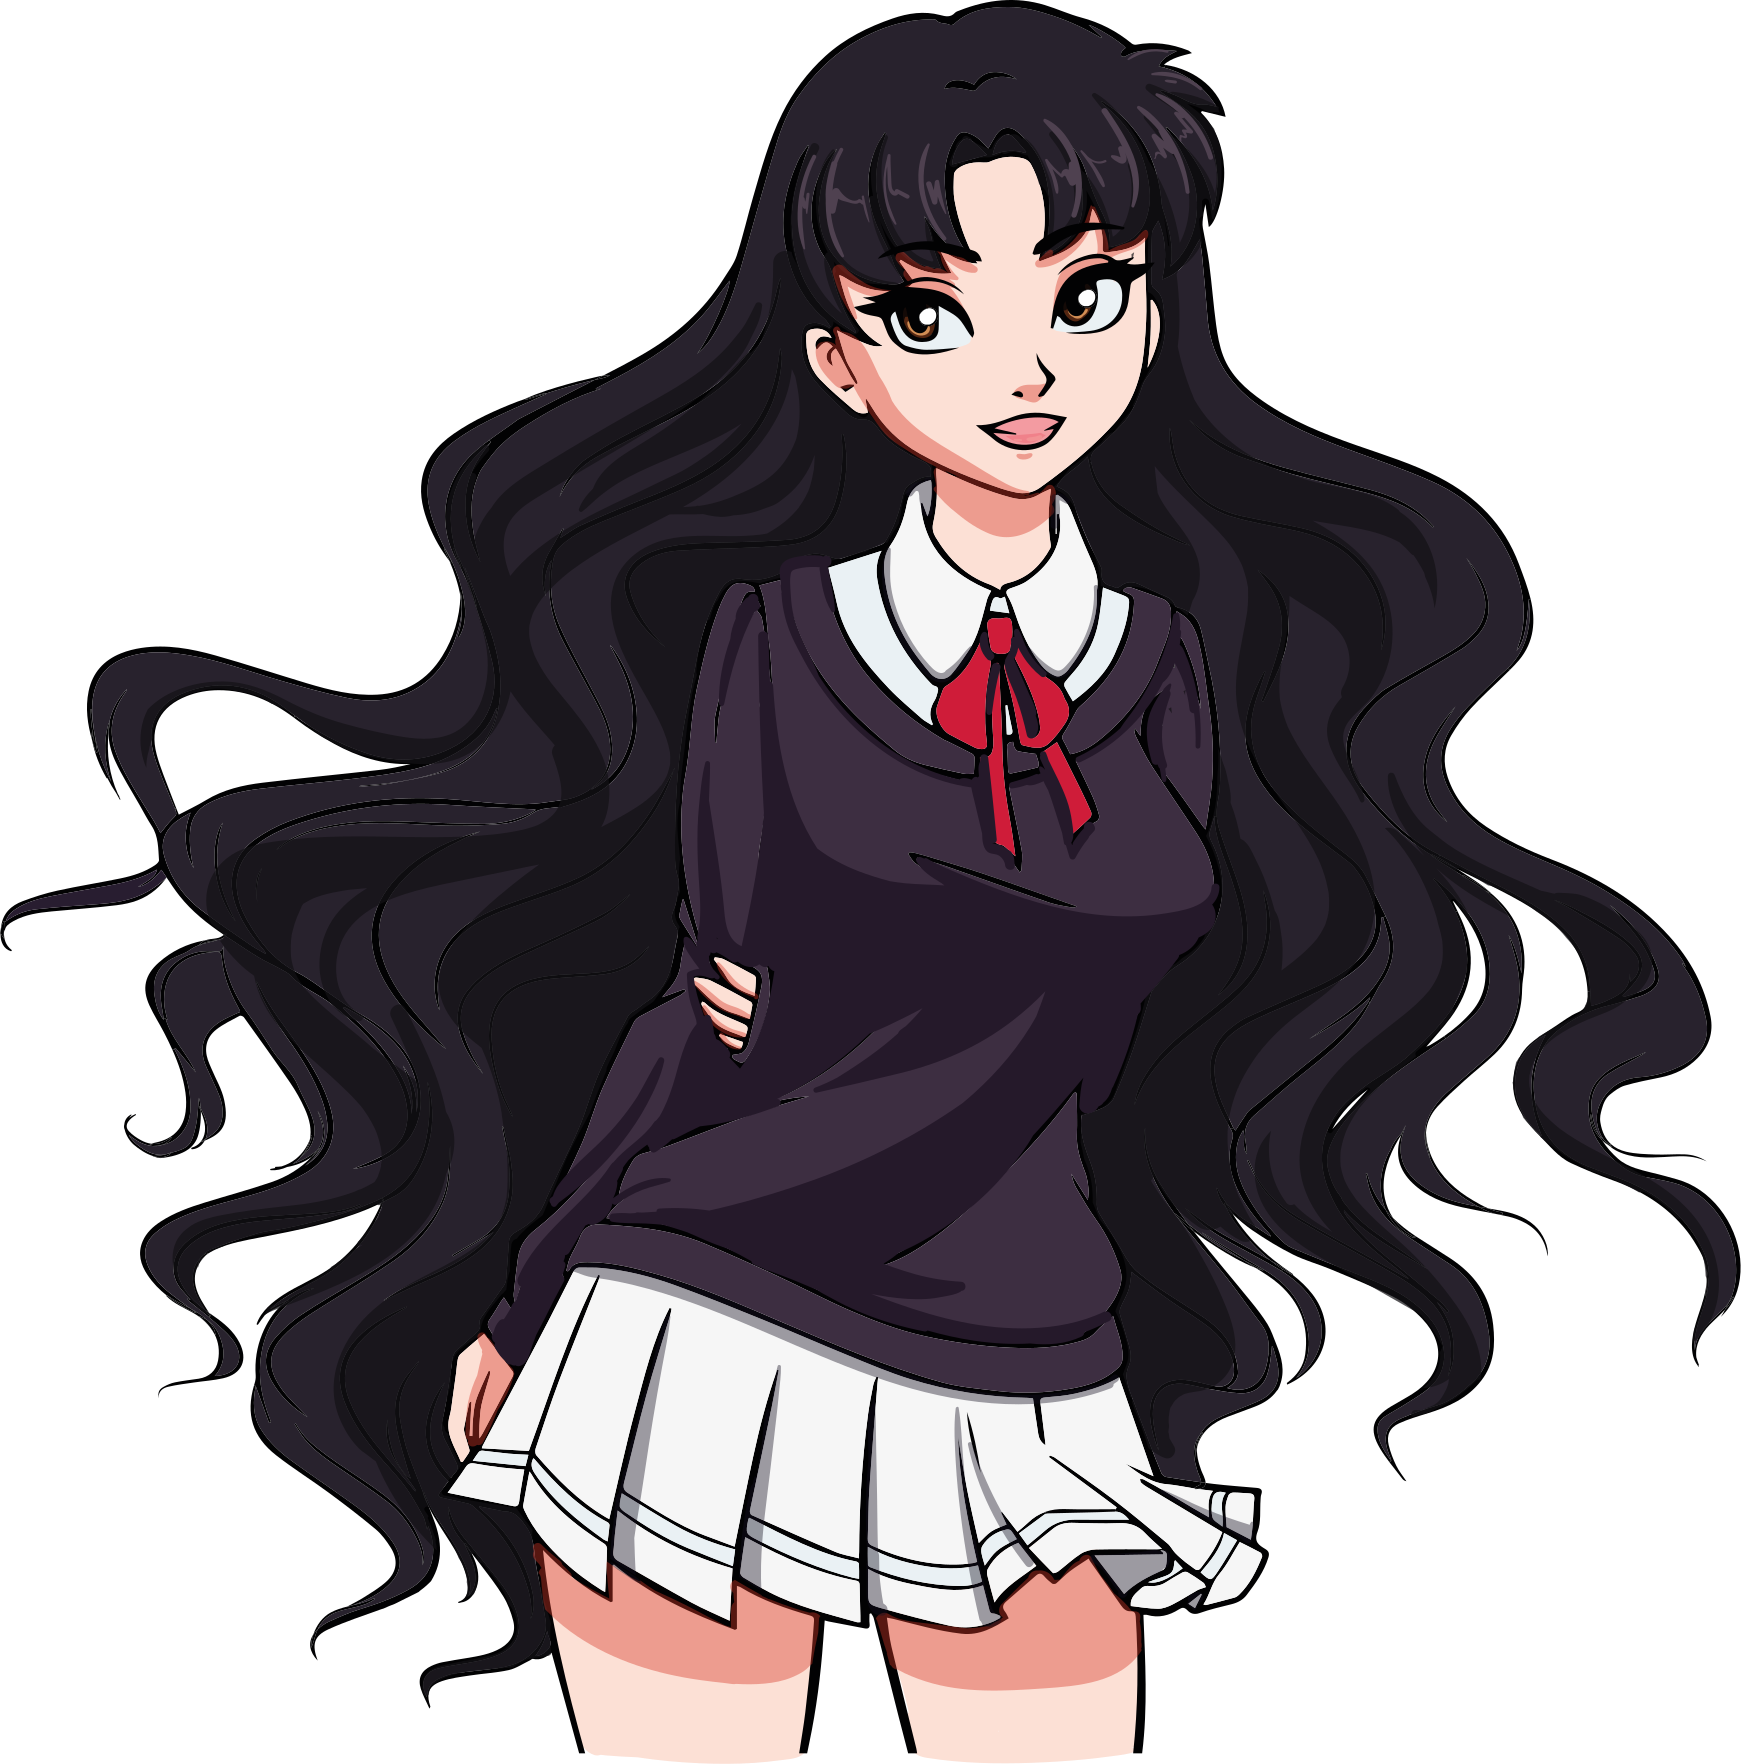 Top 10 Anime School Girls List [Slice of Life?]